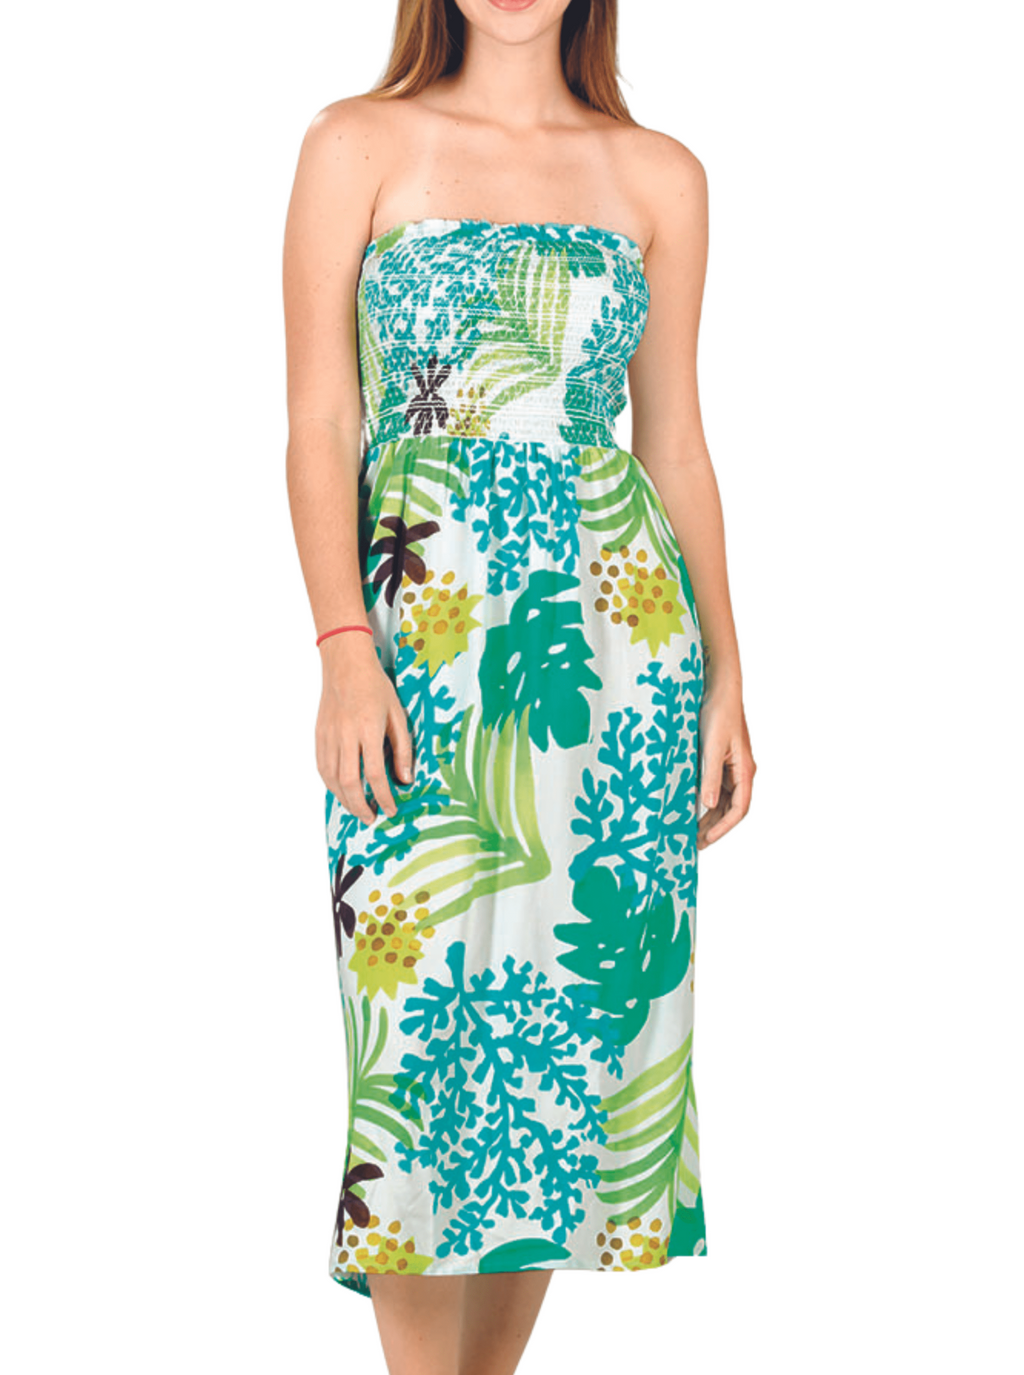 Tropical Reef Print Long Tube Dress - Shoreline Wear, Inc.